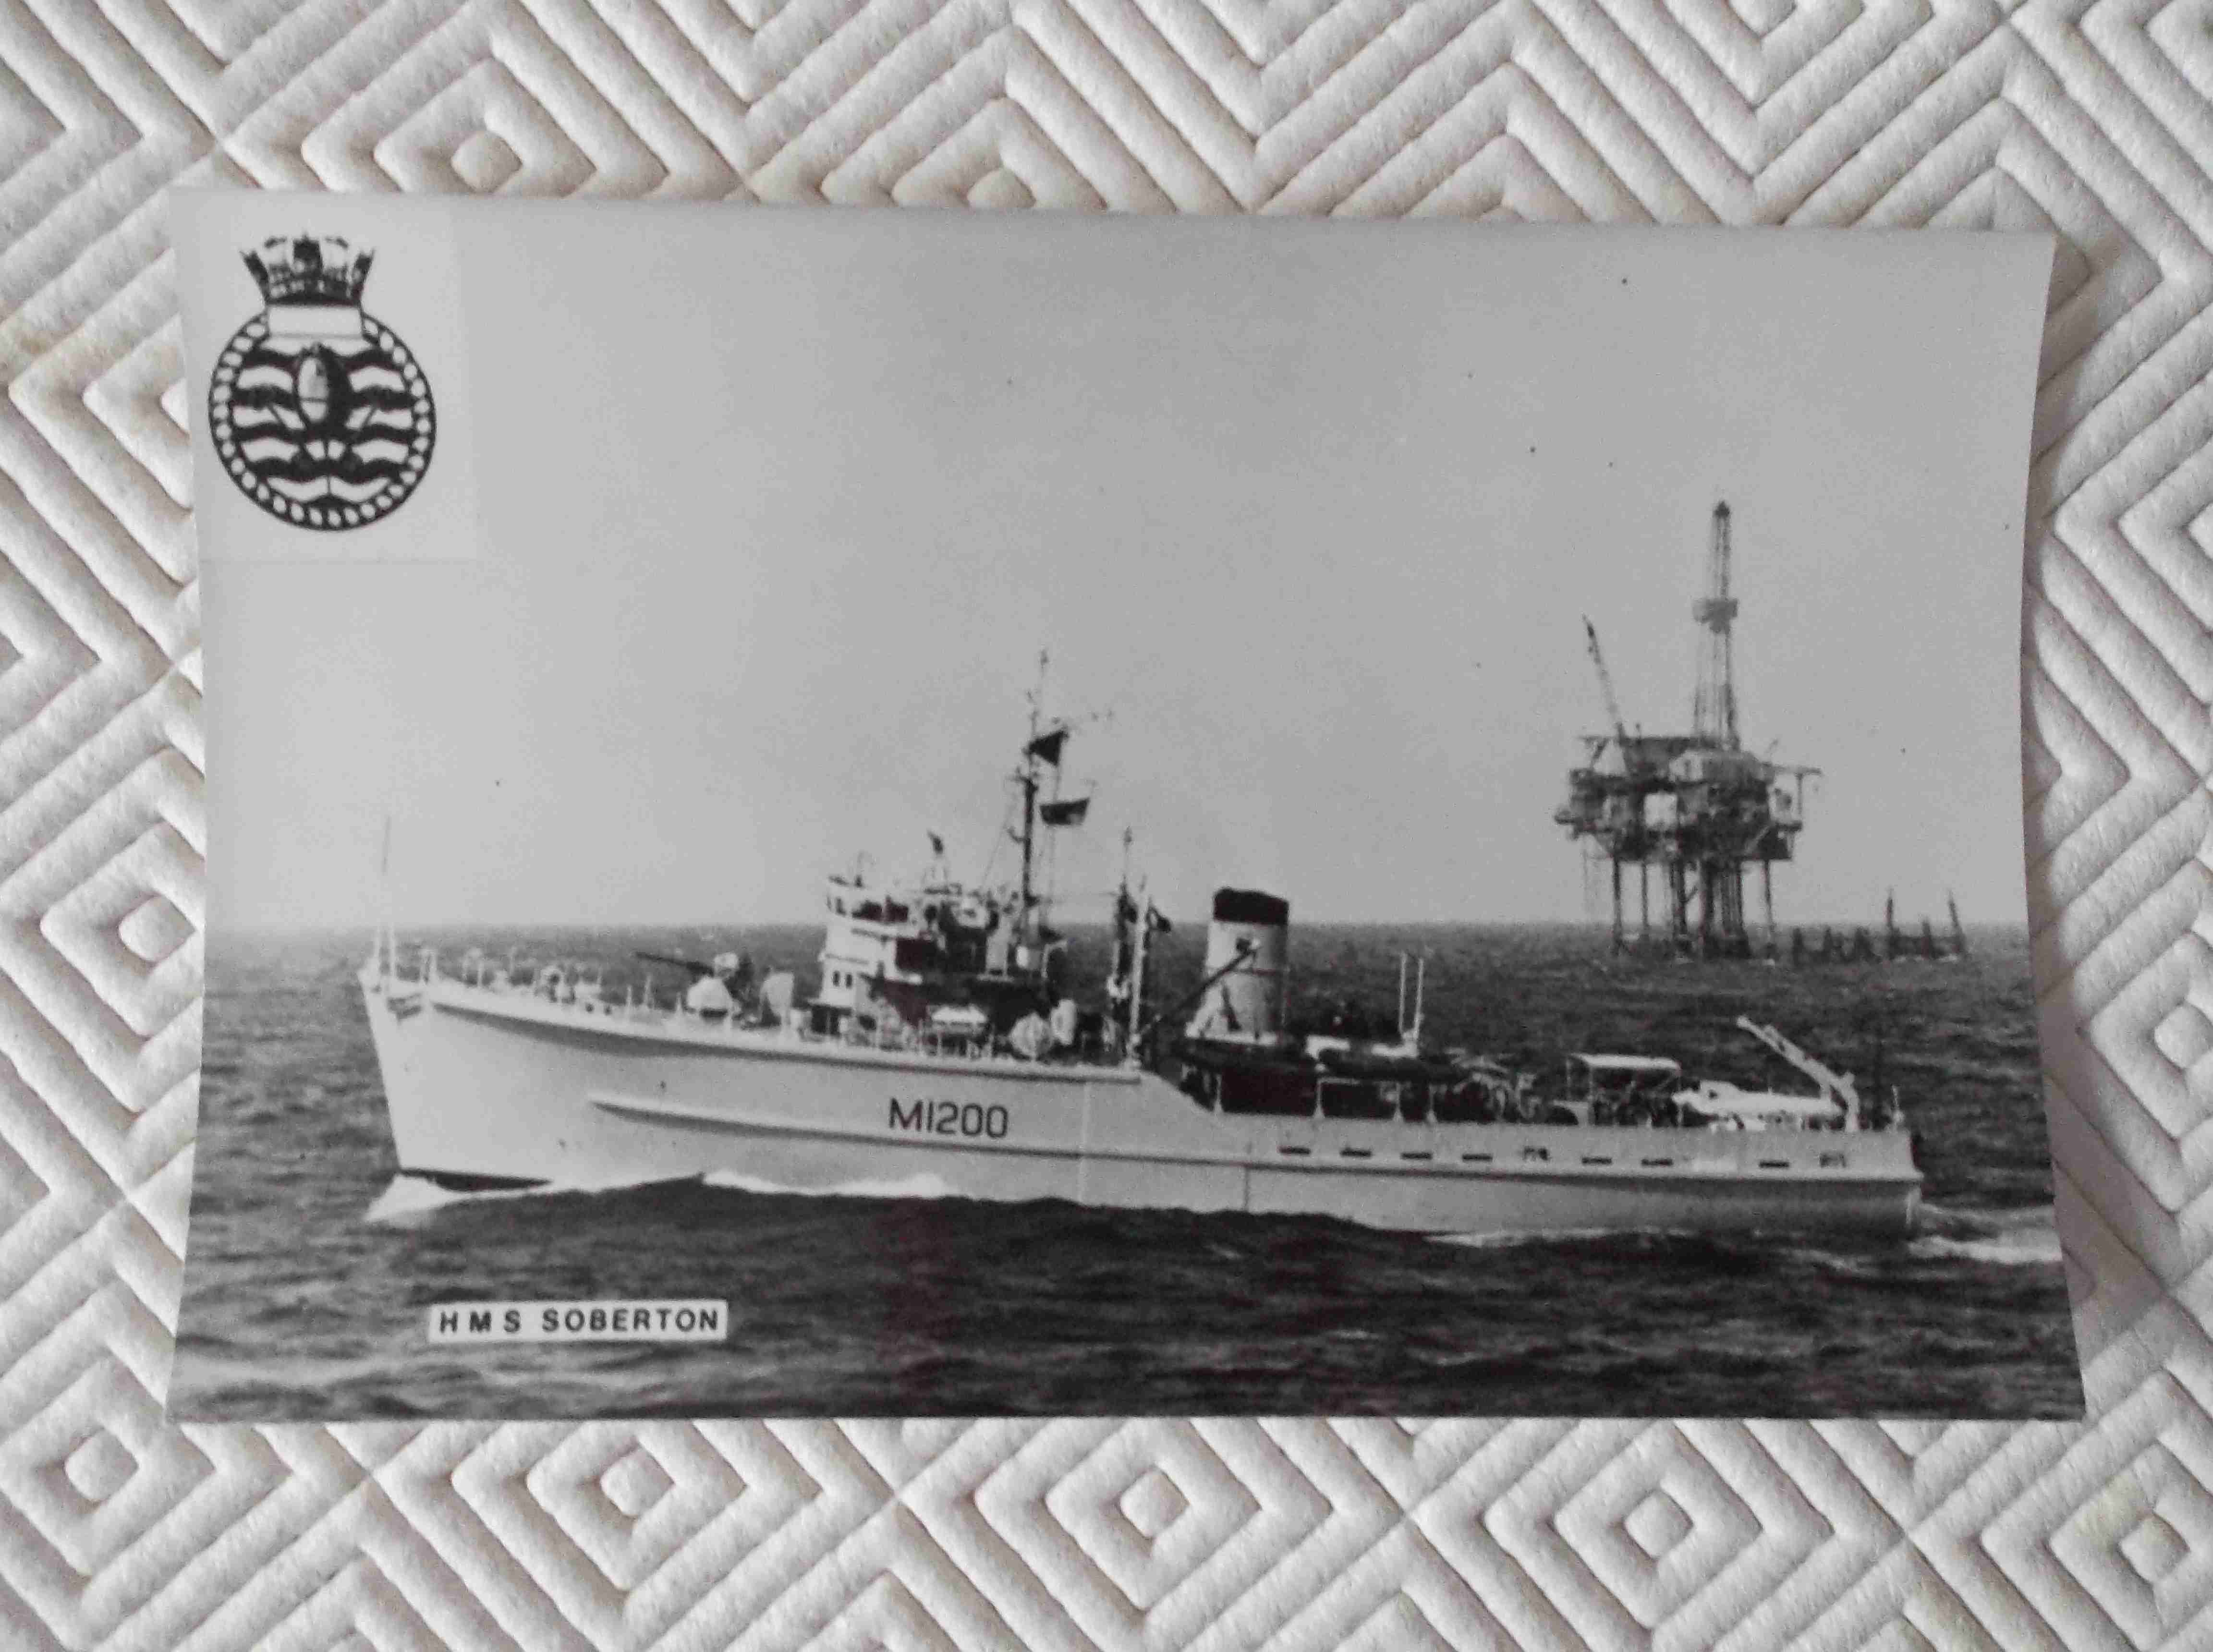 POSTCARD SIZE PHOTOGRAPH OF THE ROYAL NAVAL VESSEL HMS SOBERTON